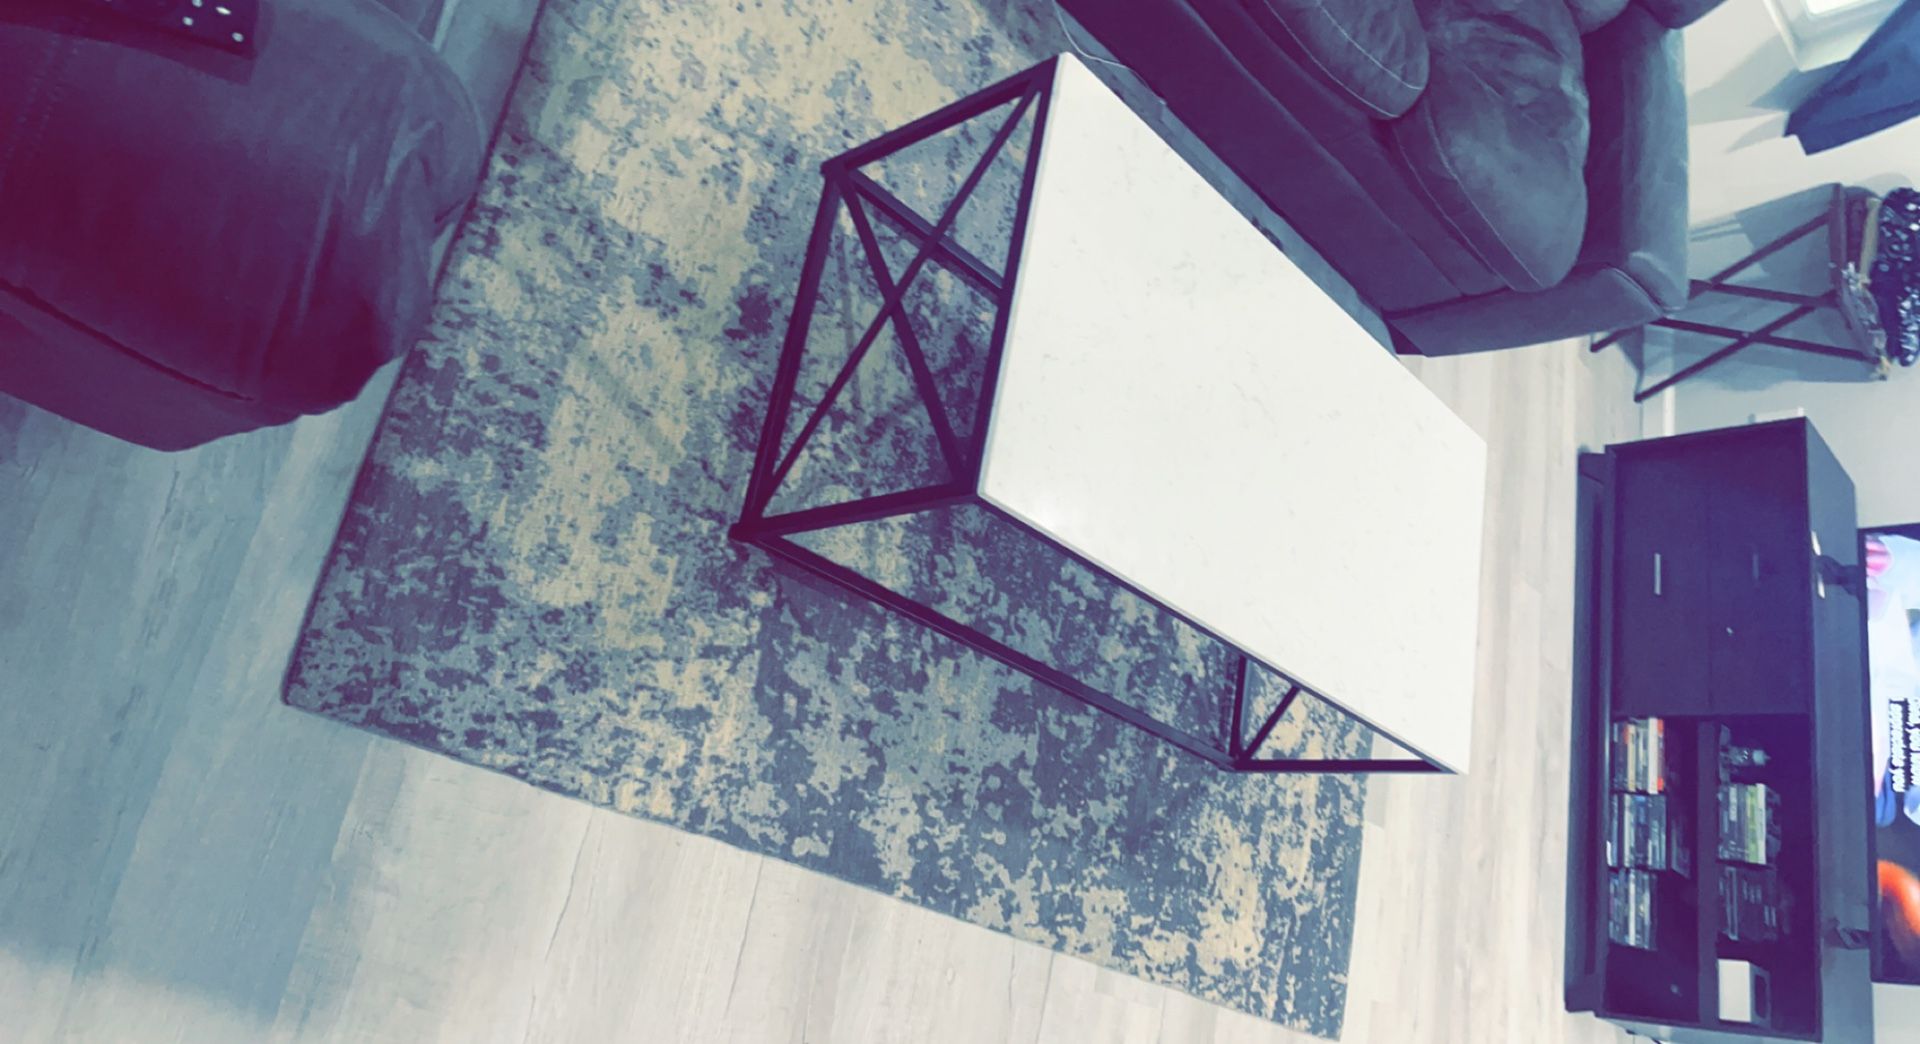 Coffee table and rug